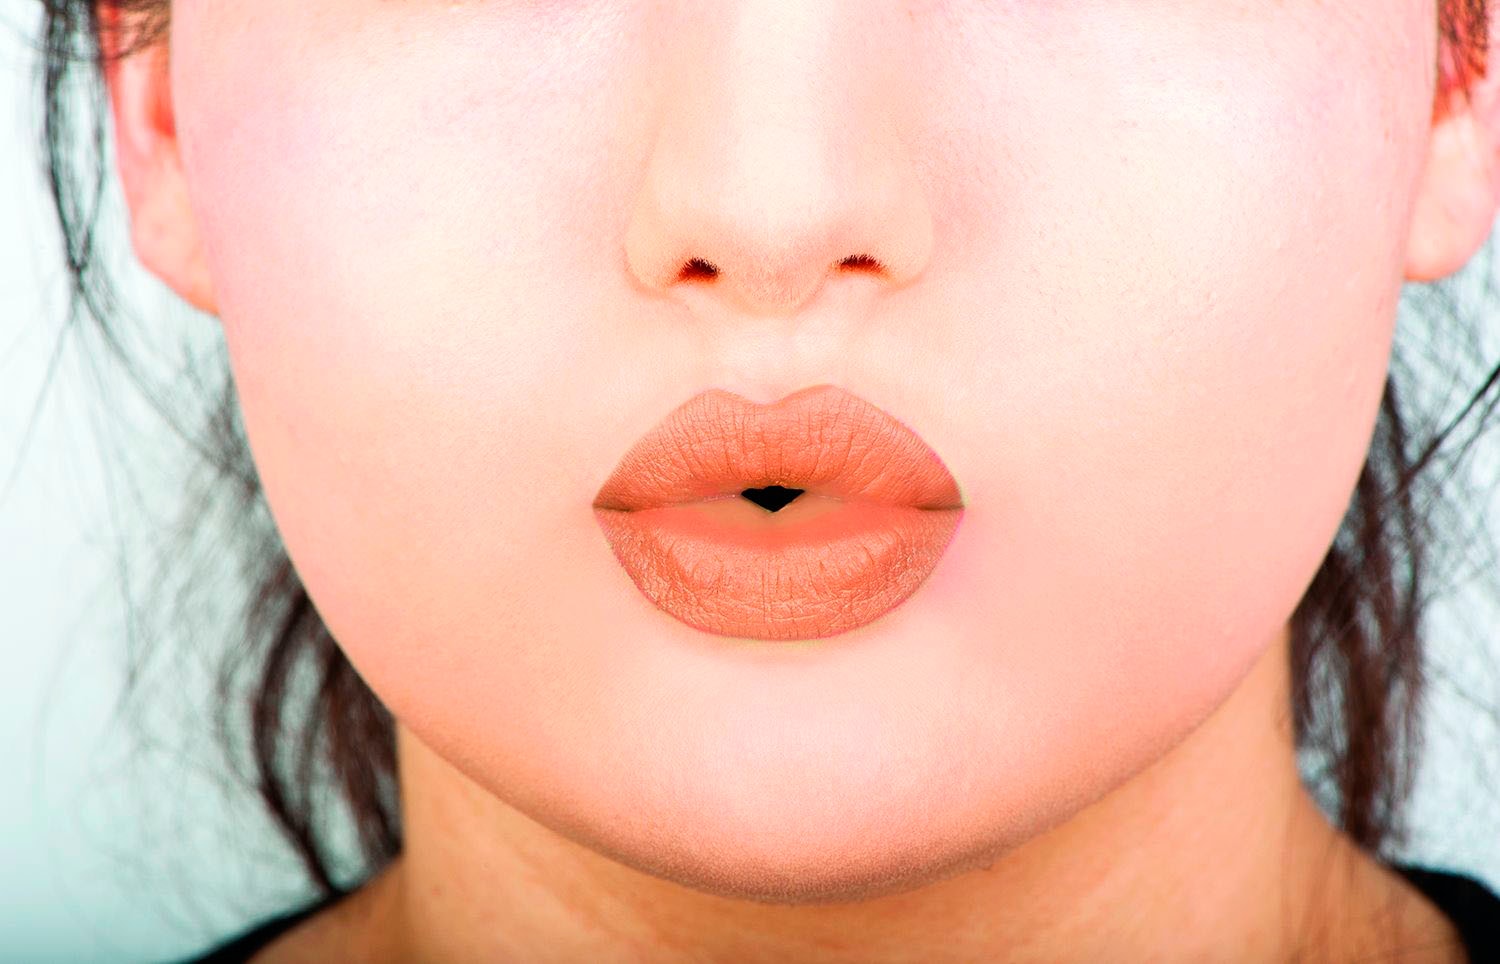 NYX Lippenstift »Professional Makeup Soft Matte Lip Cream«